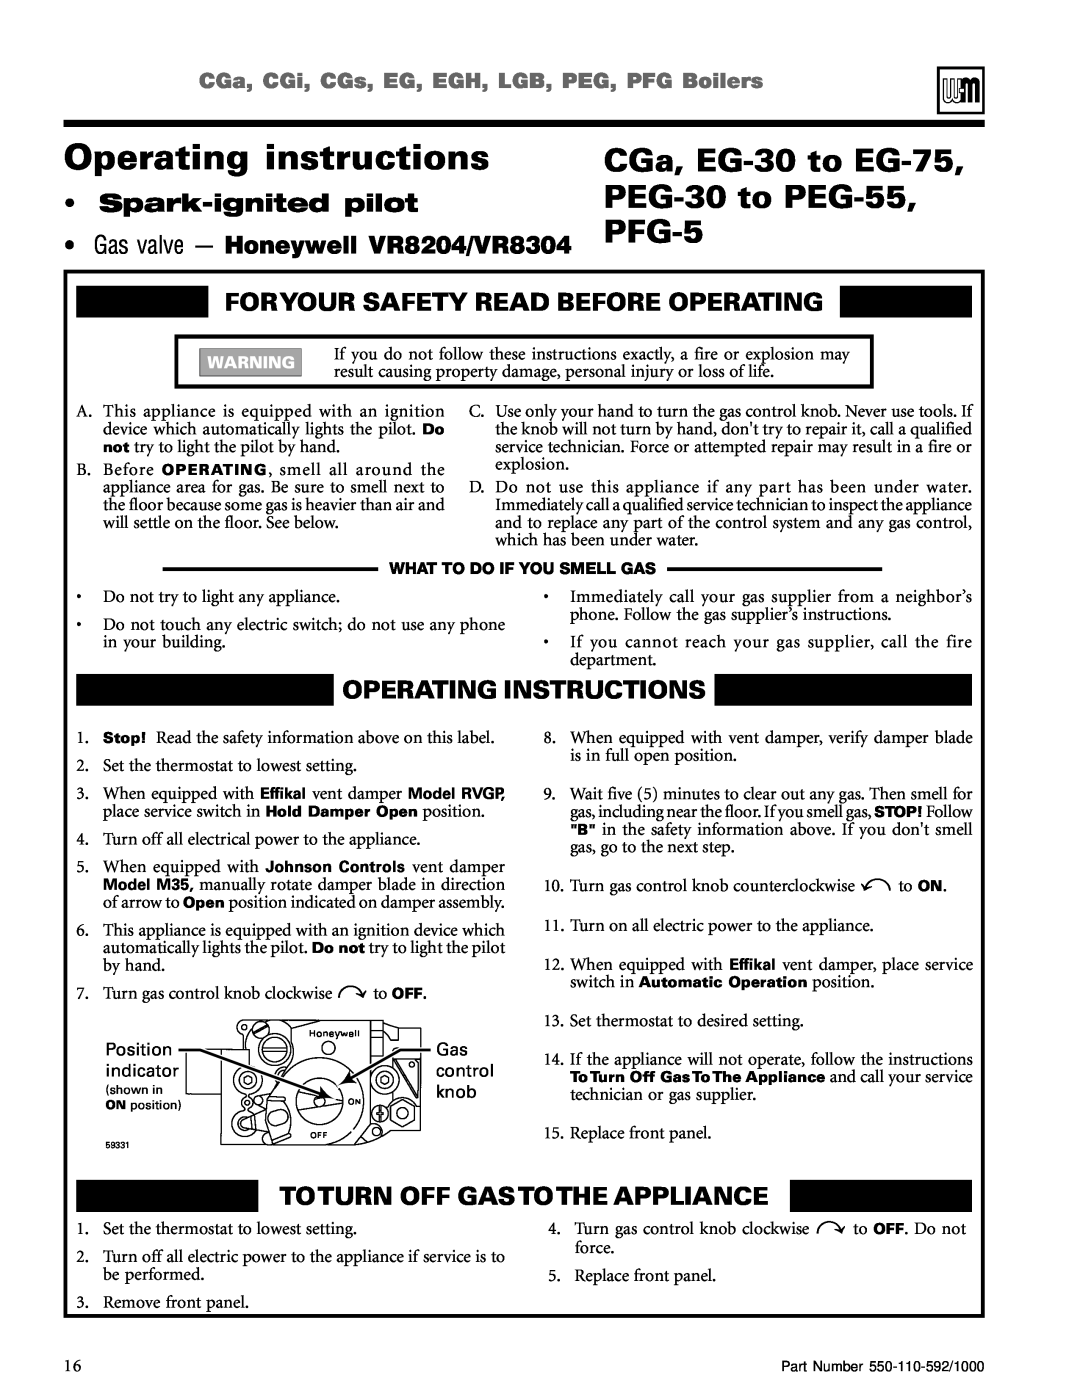 Weil-McLain LGB, CGs, CGi, EGH manual Operating instructions, CGa, EG-30to EG-75, PEG-30to PEG-55, PFG-5, Spark-ignitedpilot 